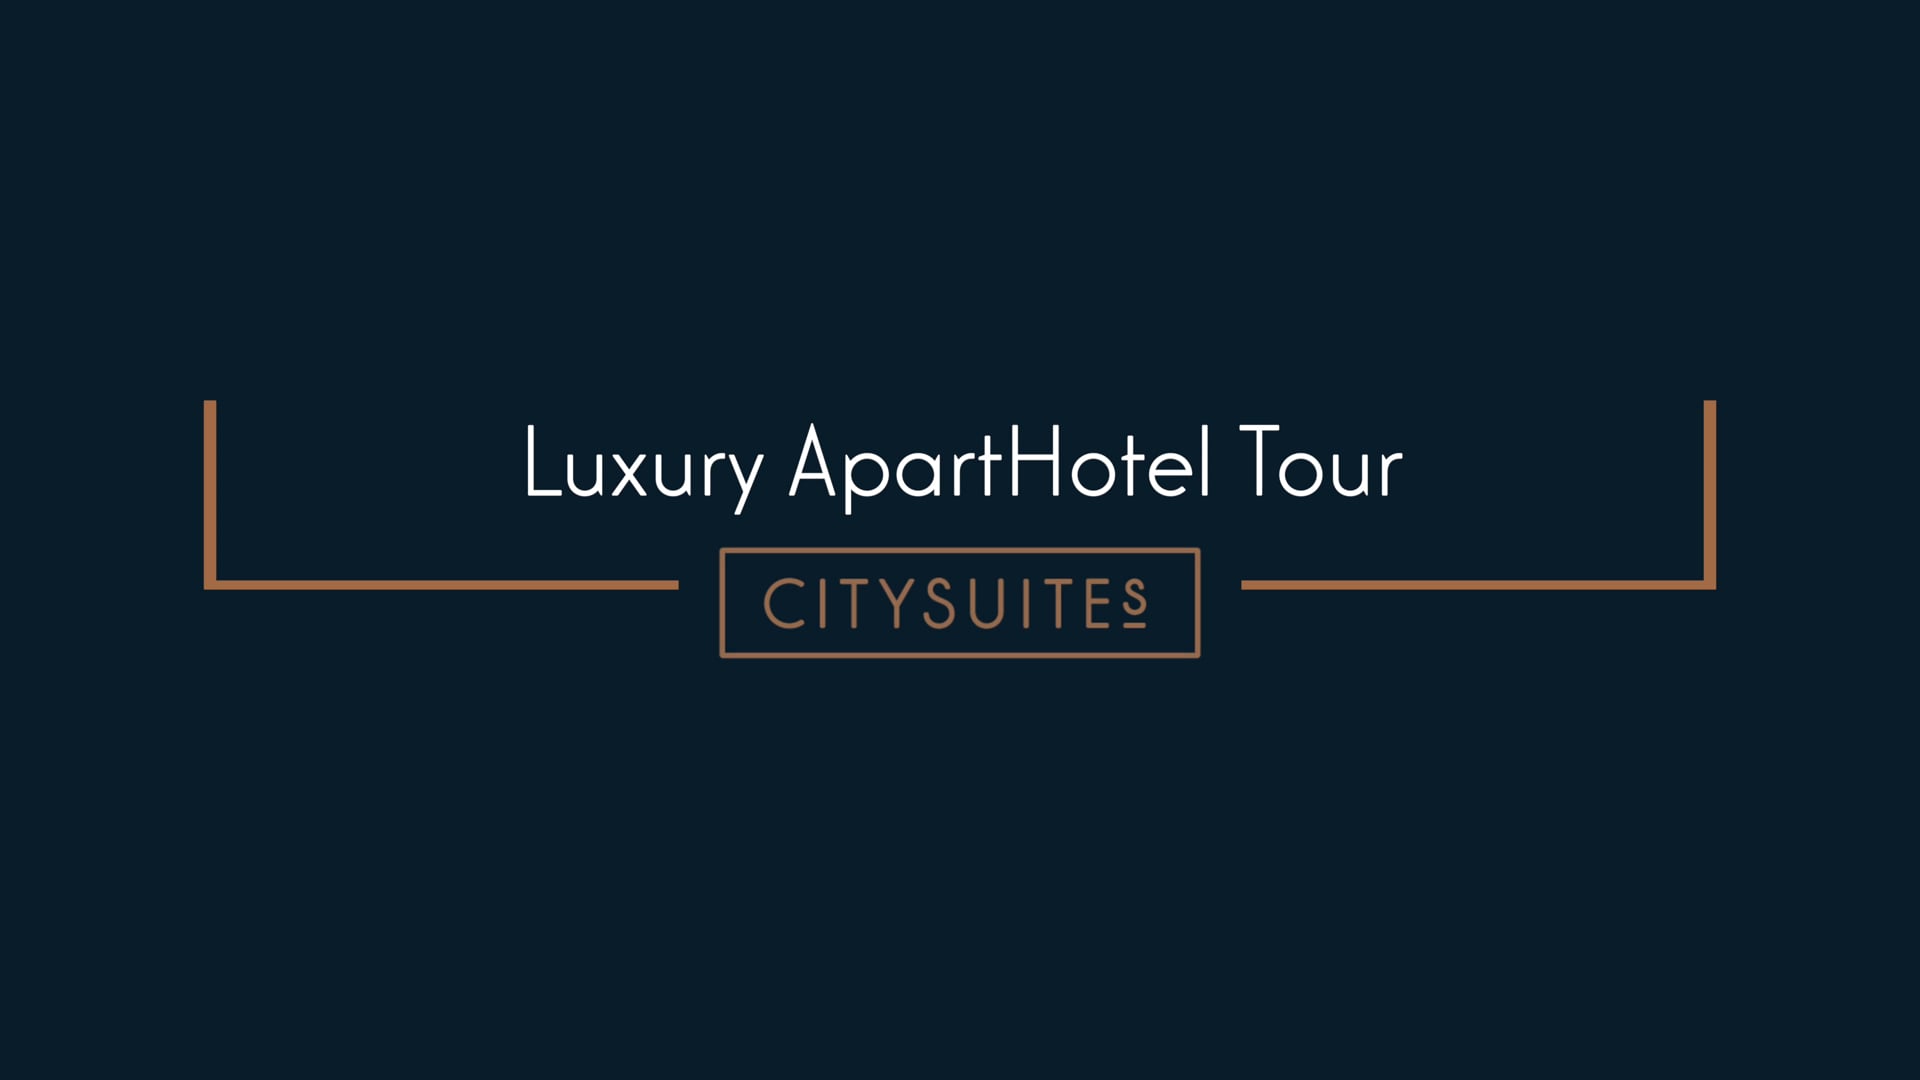 City Suites - Full Tour